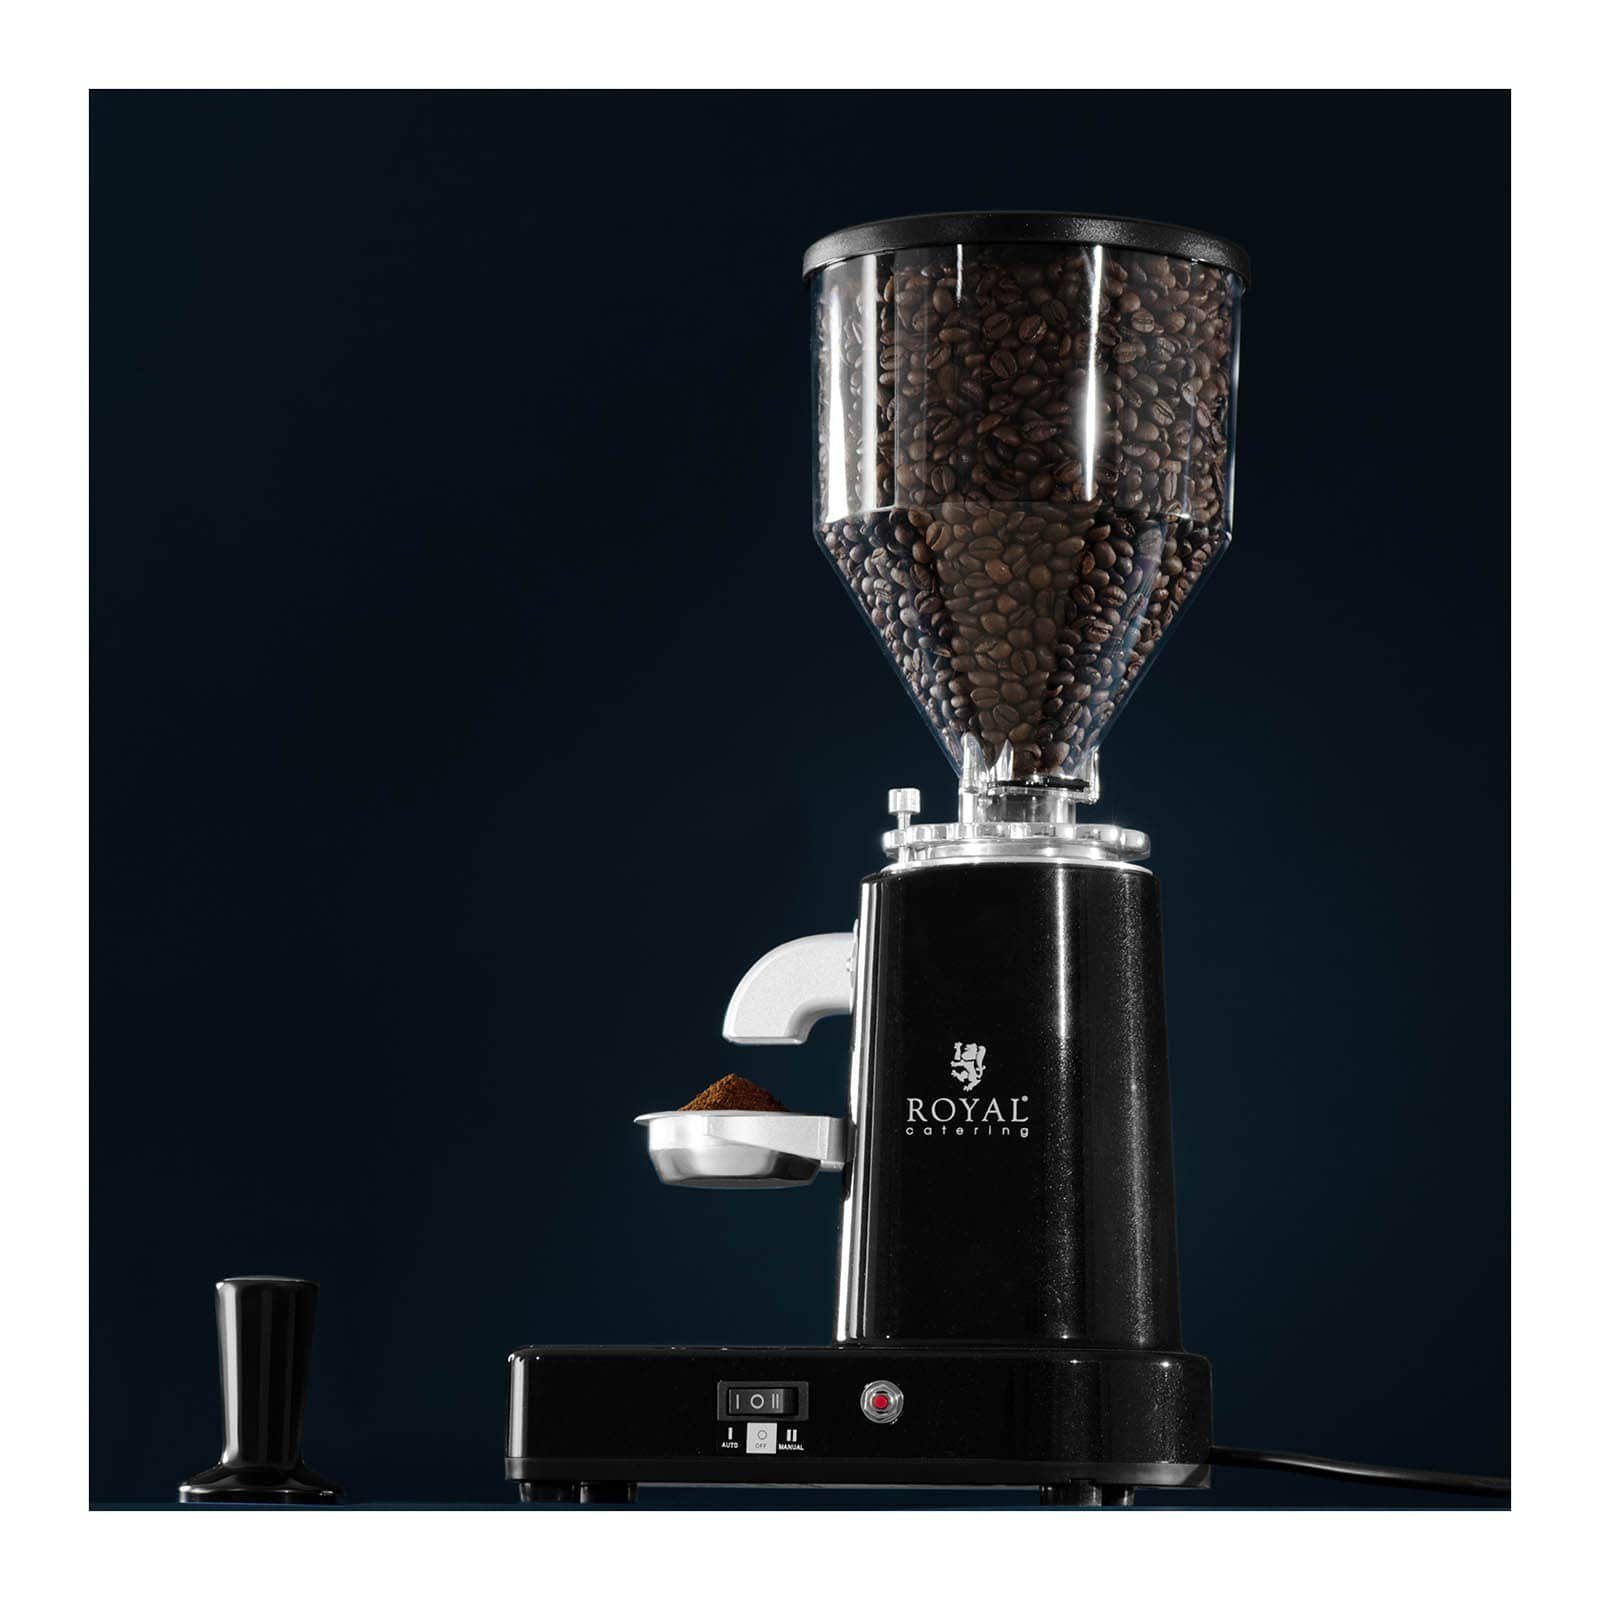 Maschine Kaffeemühle W 1000 Mahl elektrisch 200 Kaffee Catering ml Kunststoff, Royal 200 W Kaffeemühle